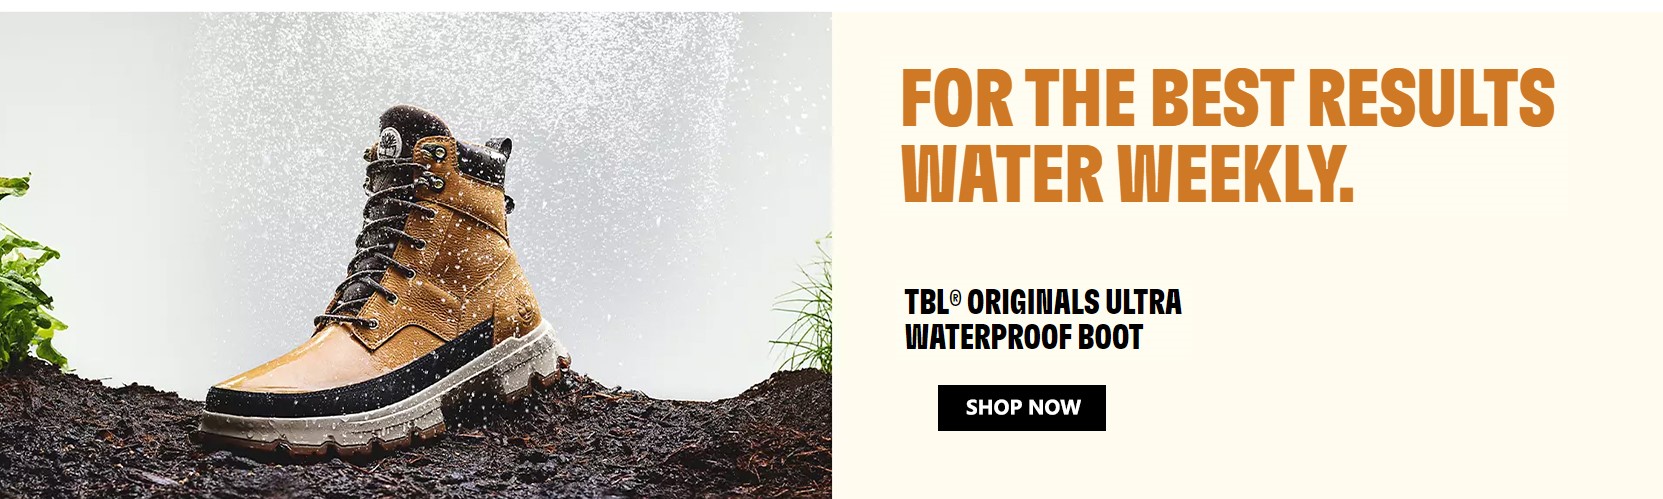 tbl originals ultra waterproof